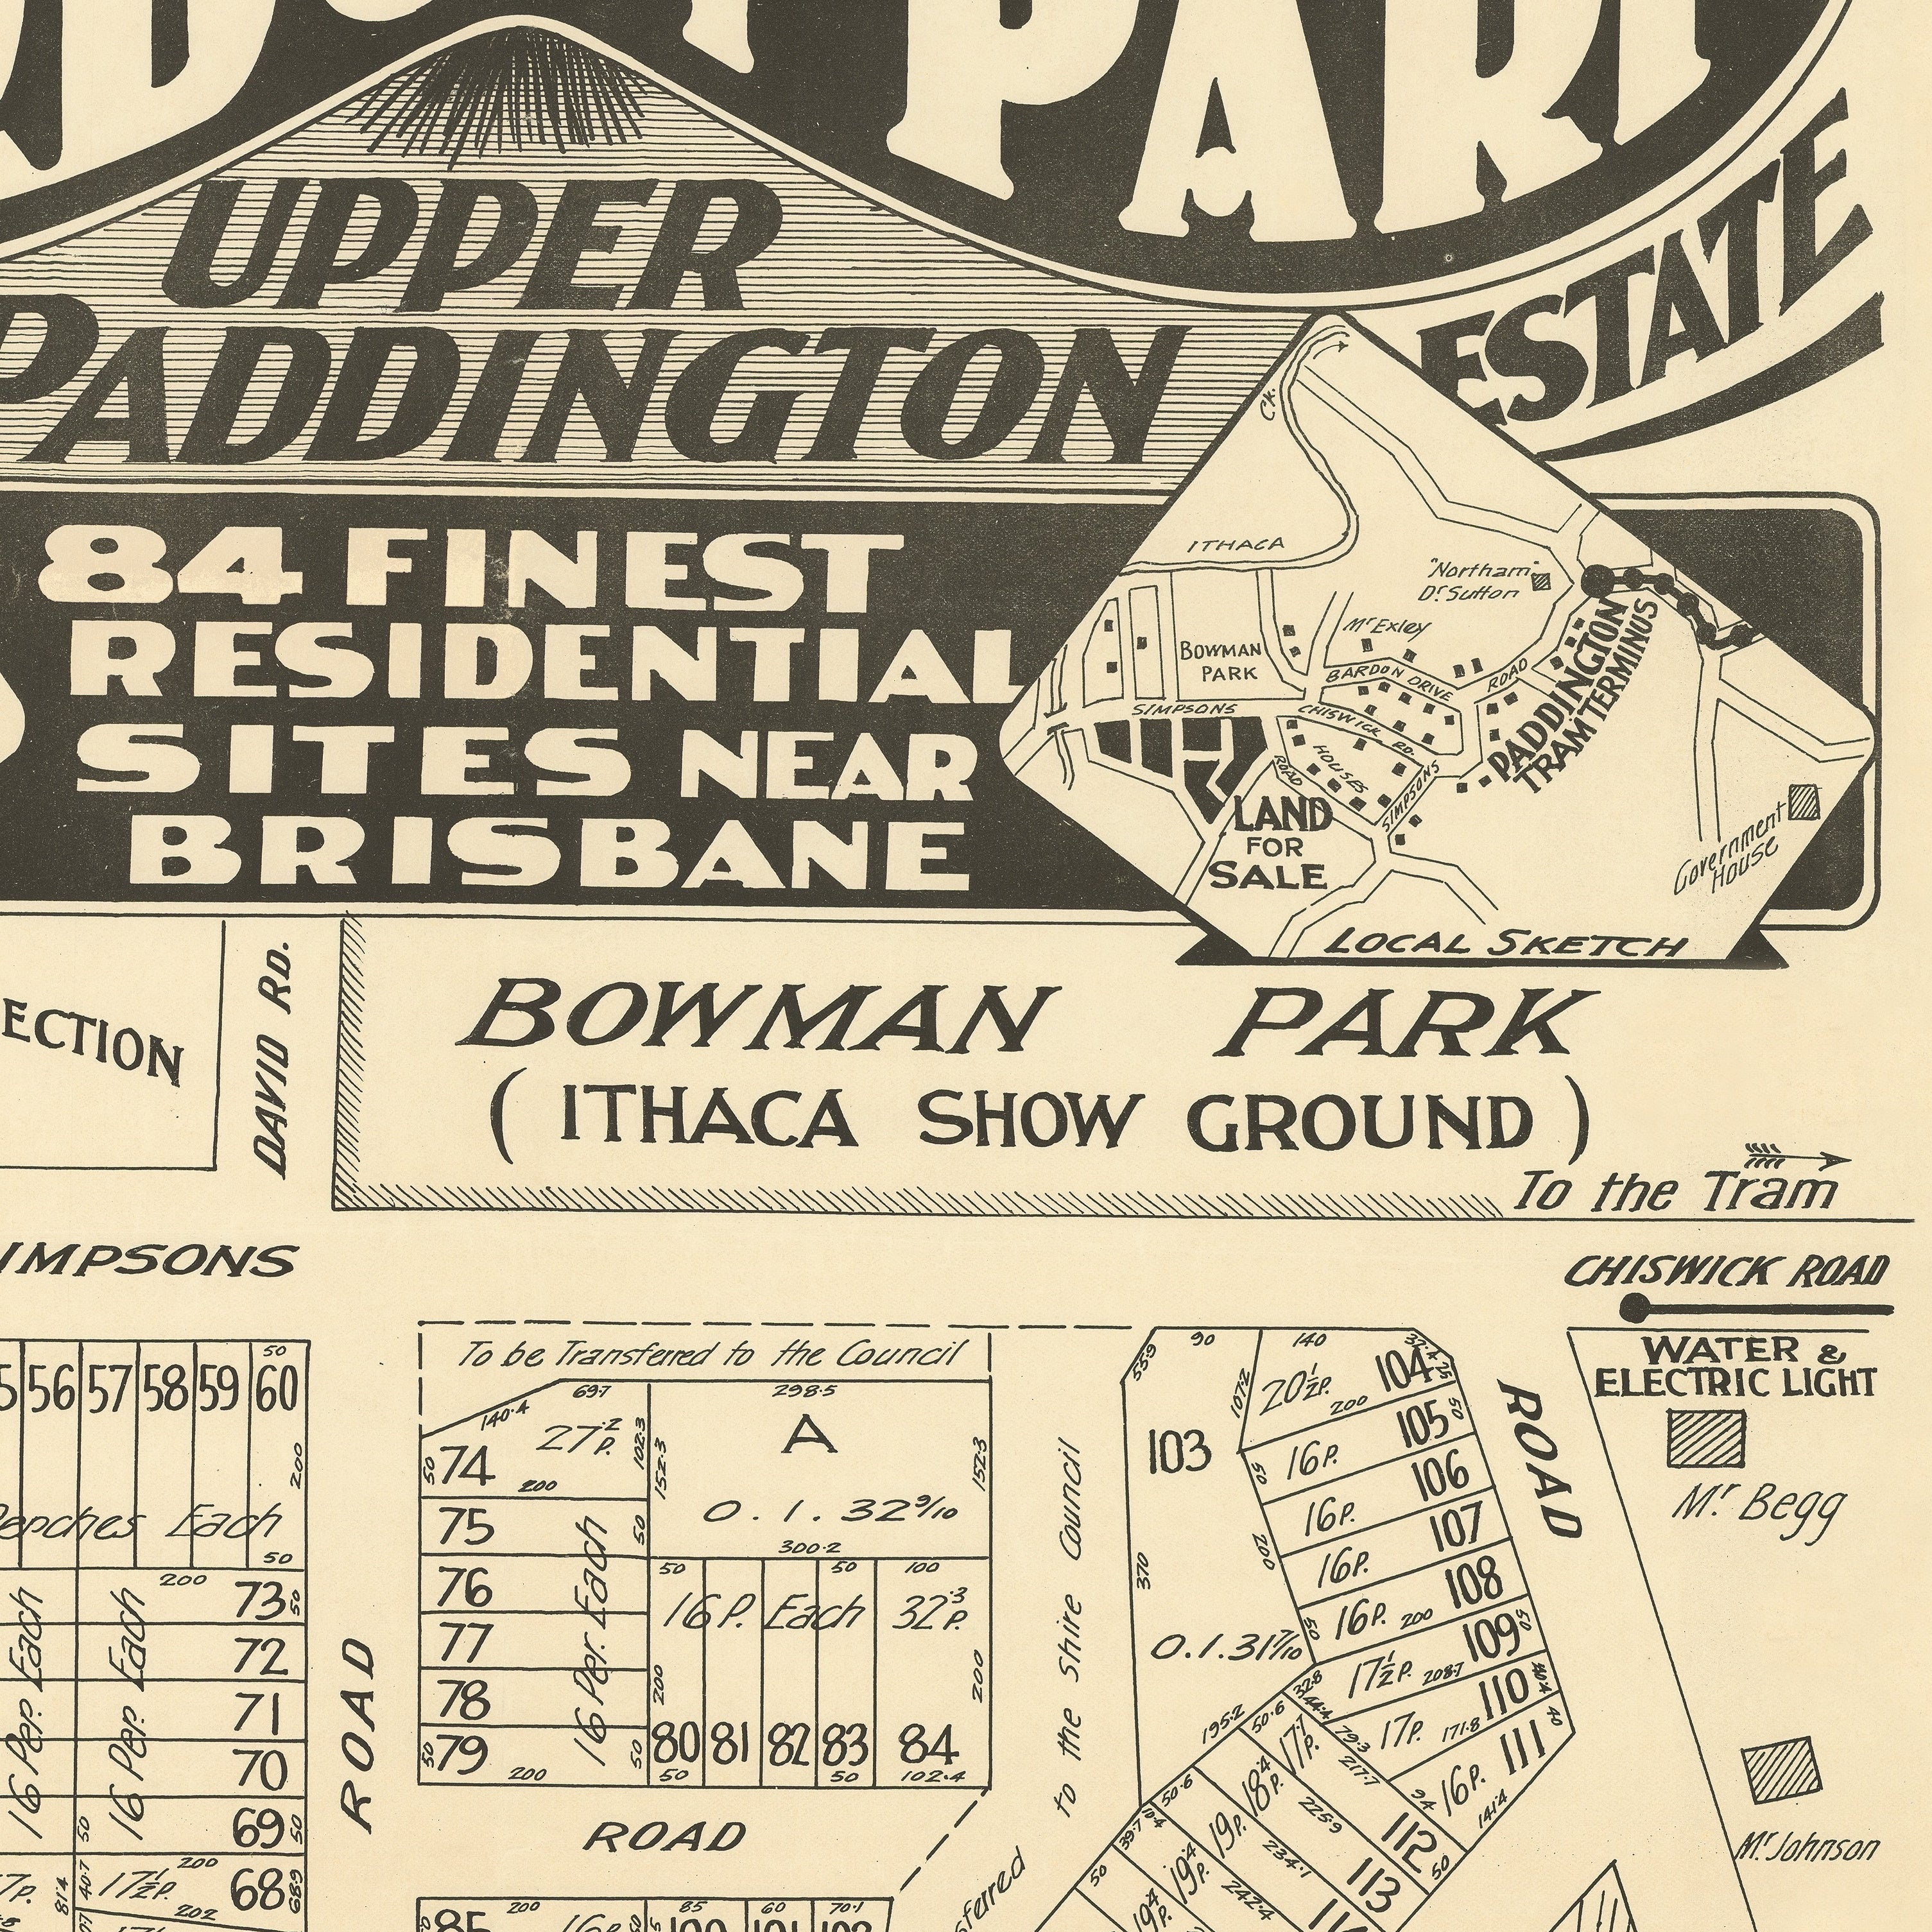 1920 Bardon - Bardon Park Estate - 2nd Section